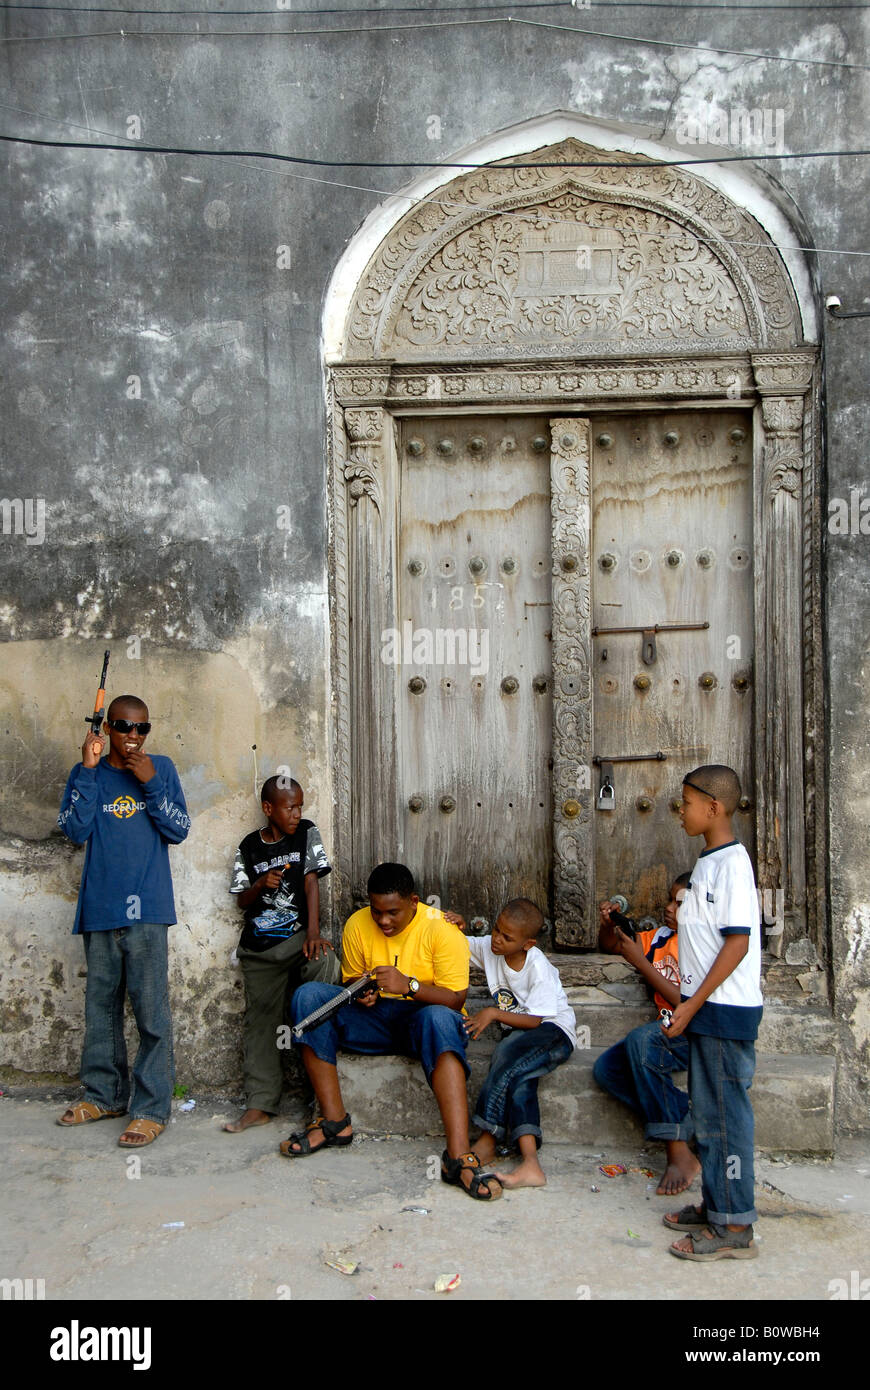 Street scene, kids standing in front of an old door in Stone Town, Zanzibar, Tanzania, Africa Stock Photo